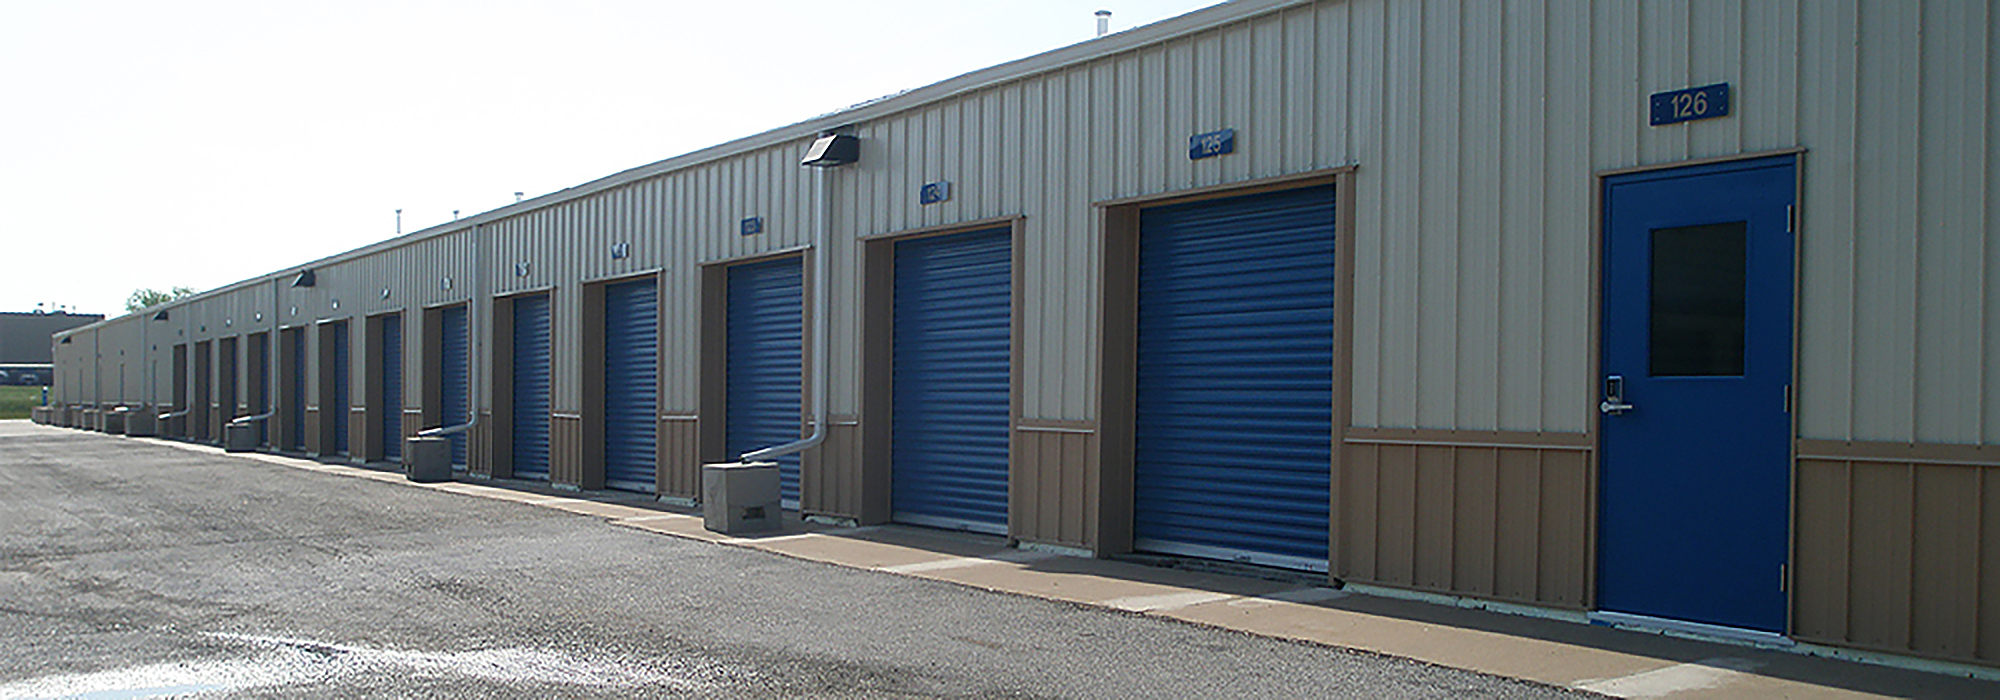 Large garage storage units at QC-Storage in Davenport, Iowa.